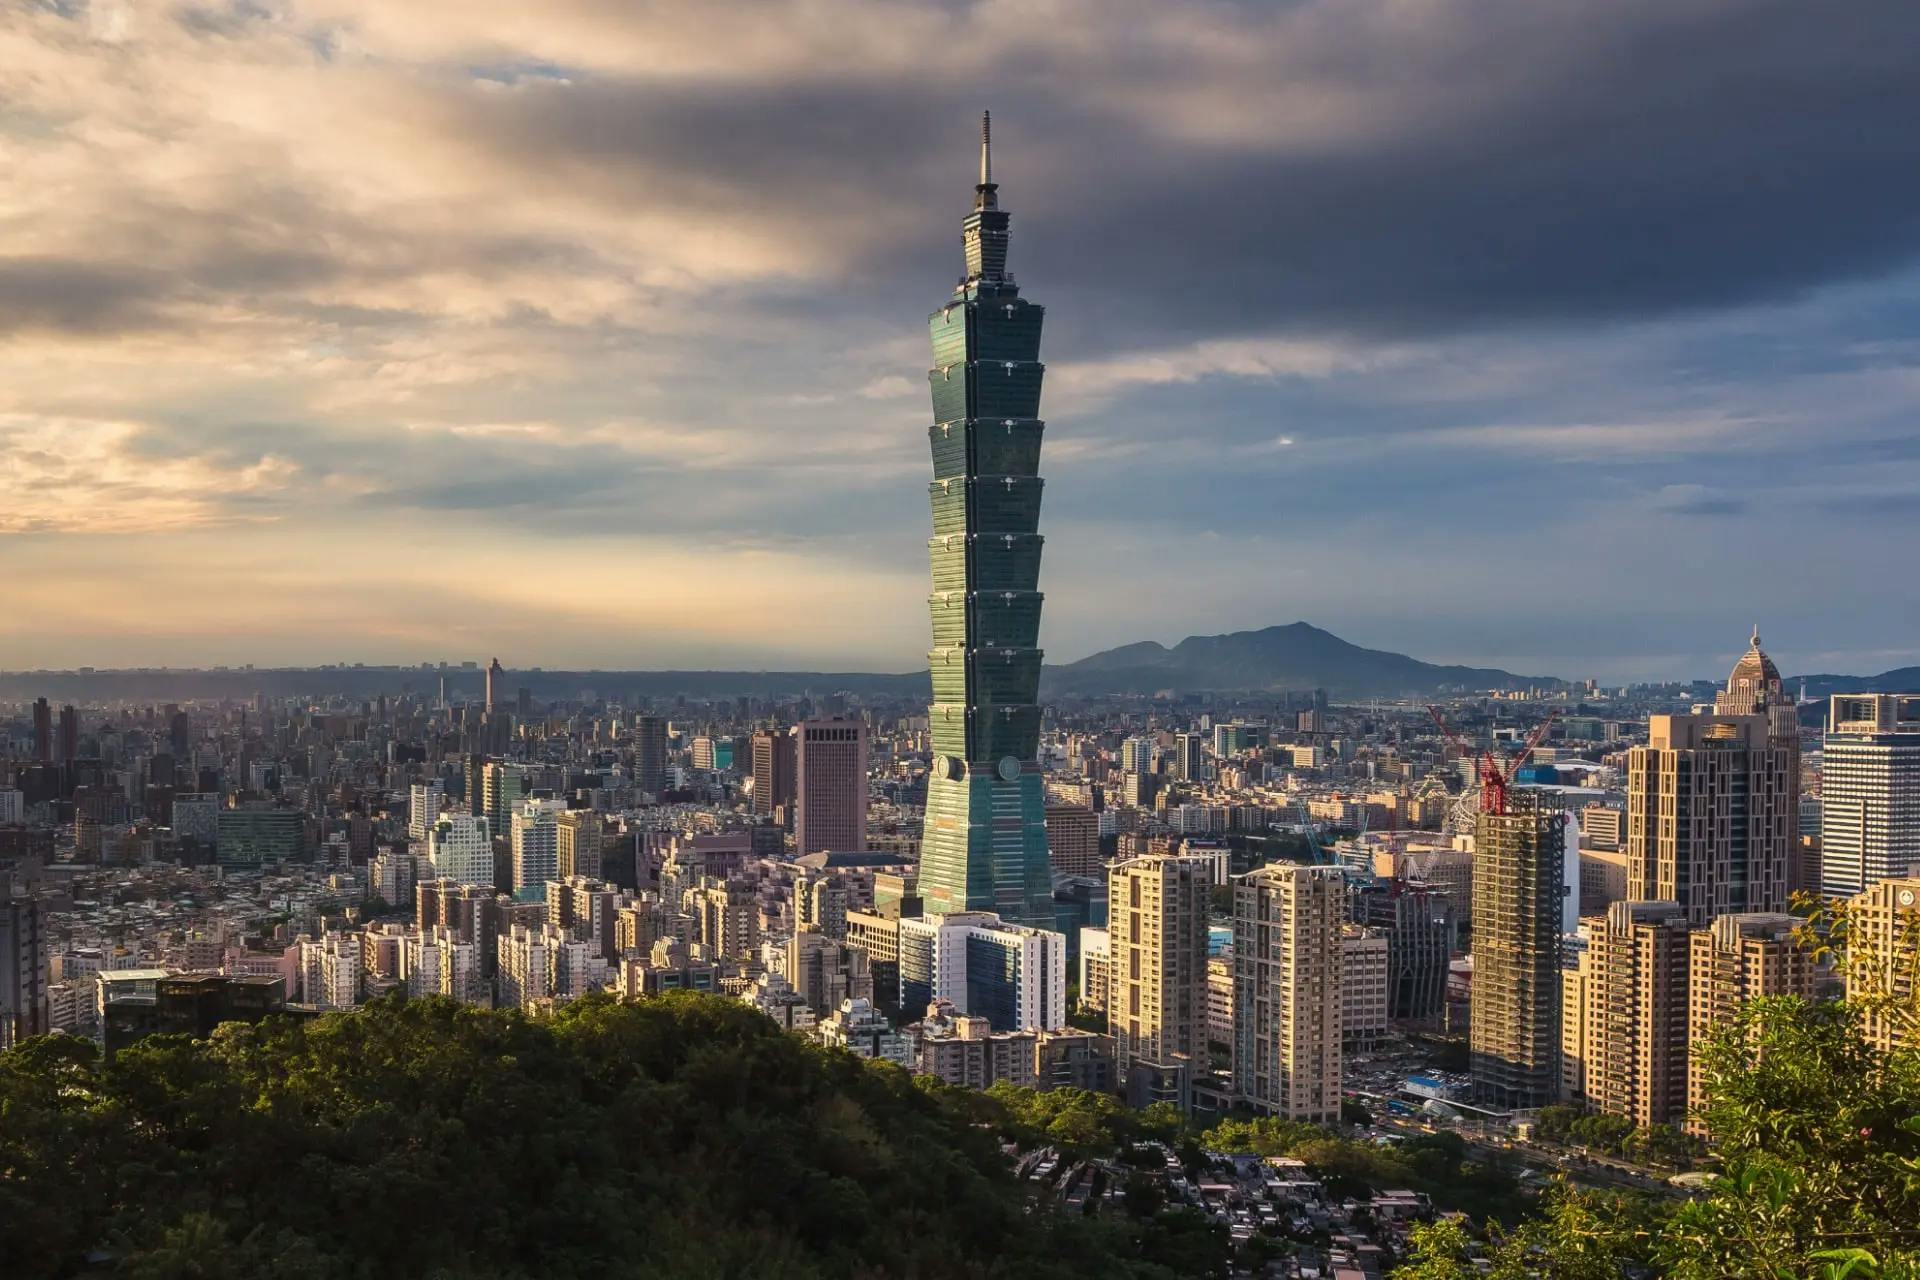 The beautiful Taiwanese skyline